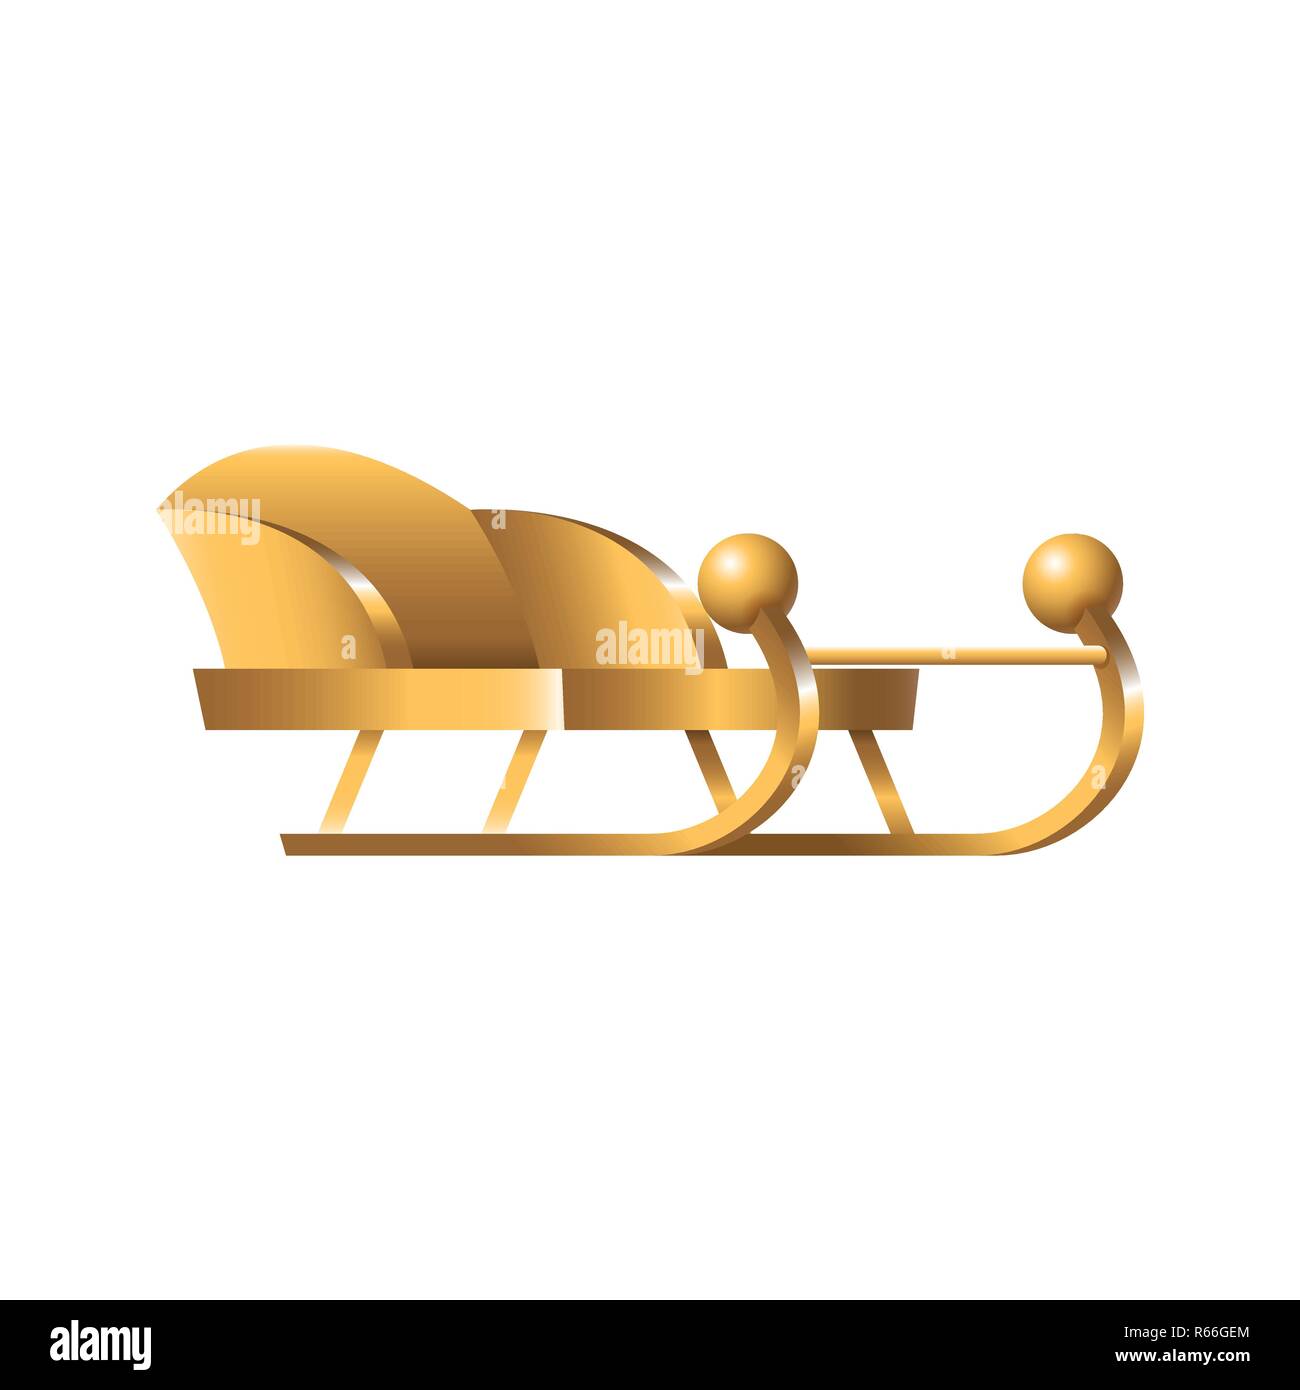 Golden sled vector illustration isolated on white background Stock Vector